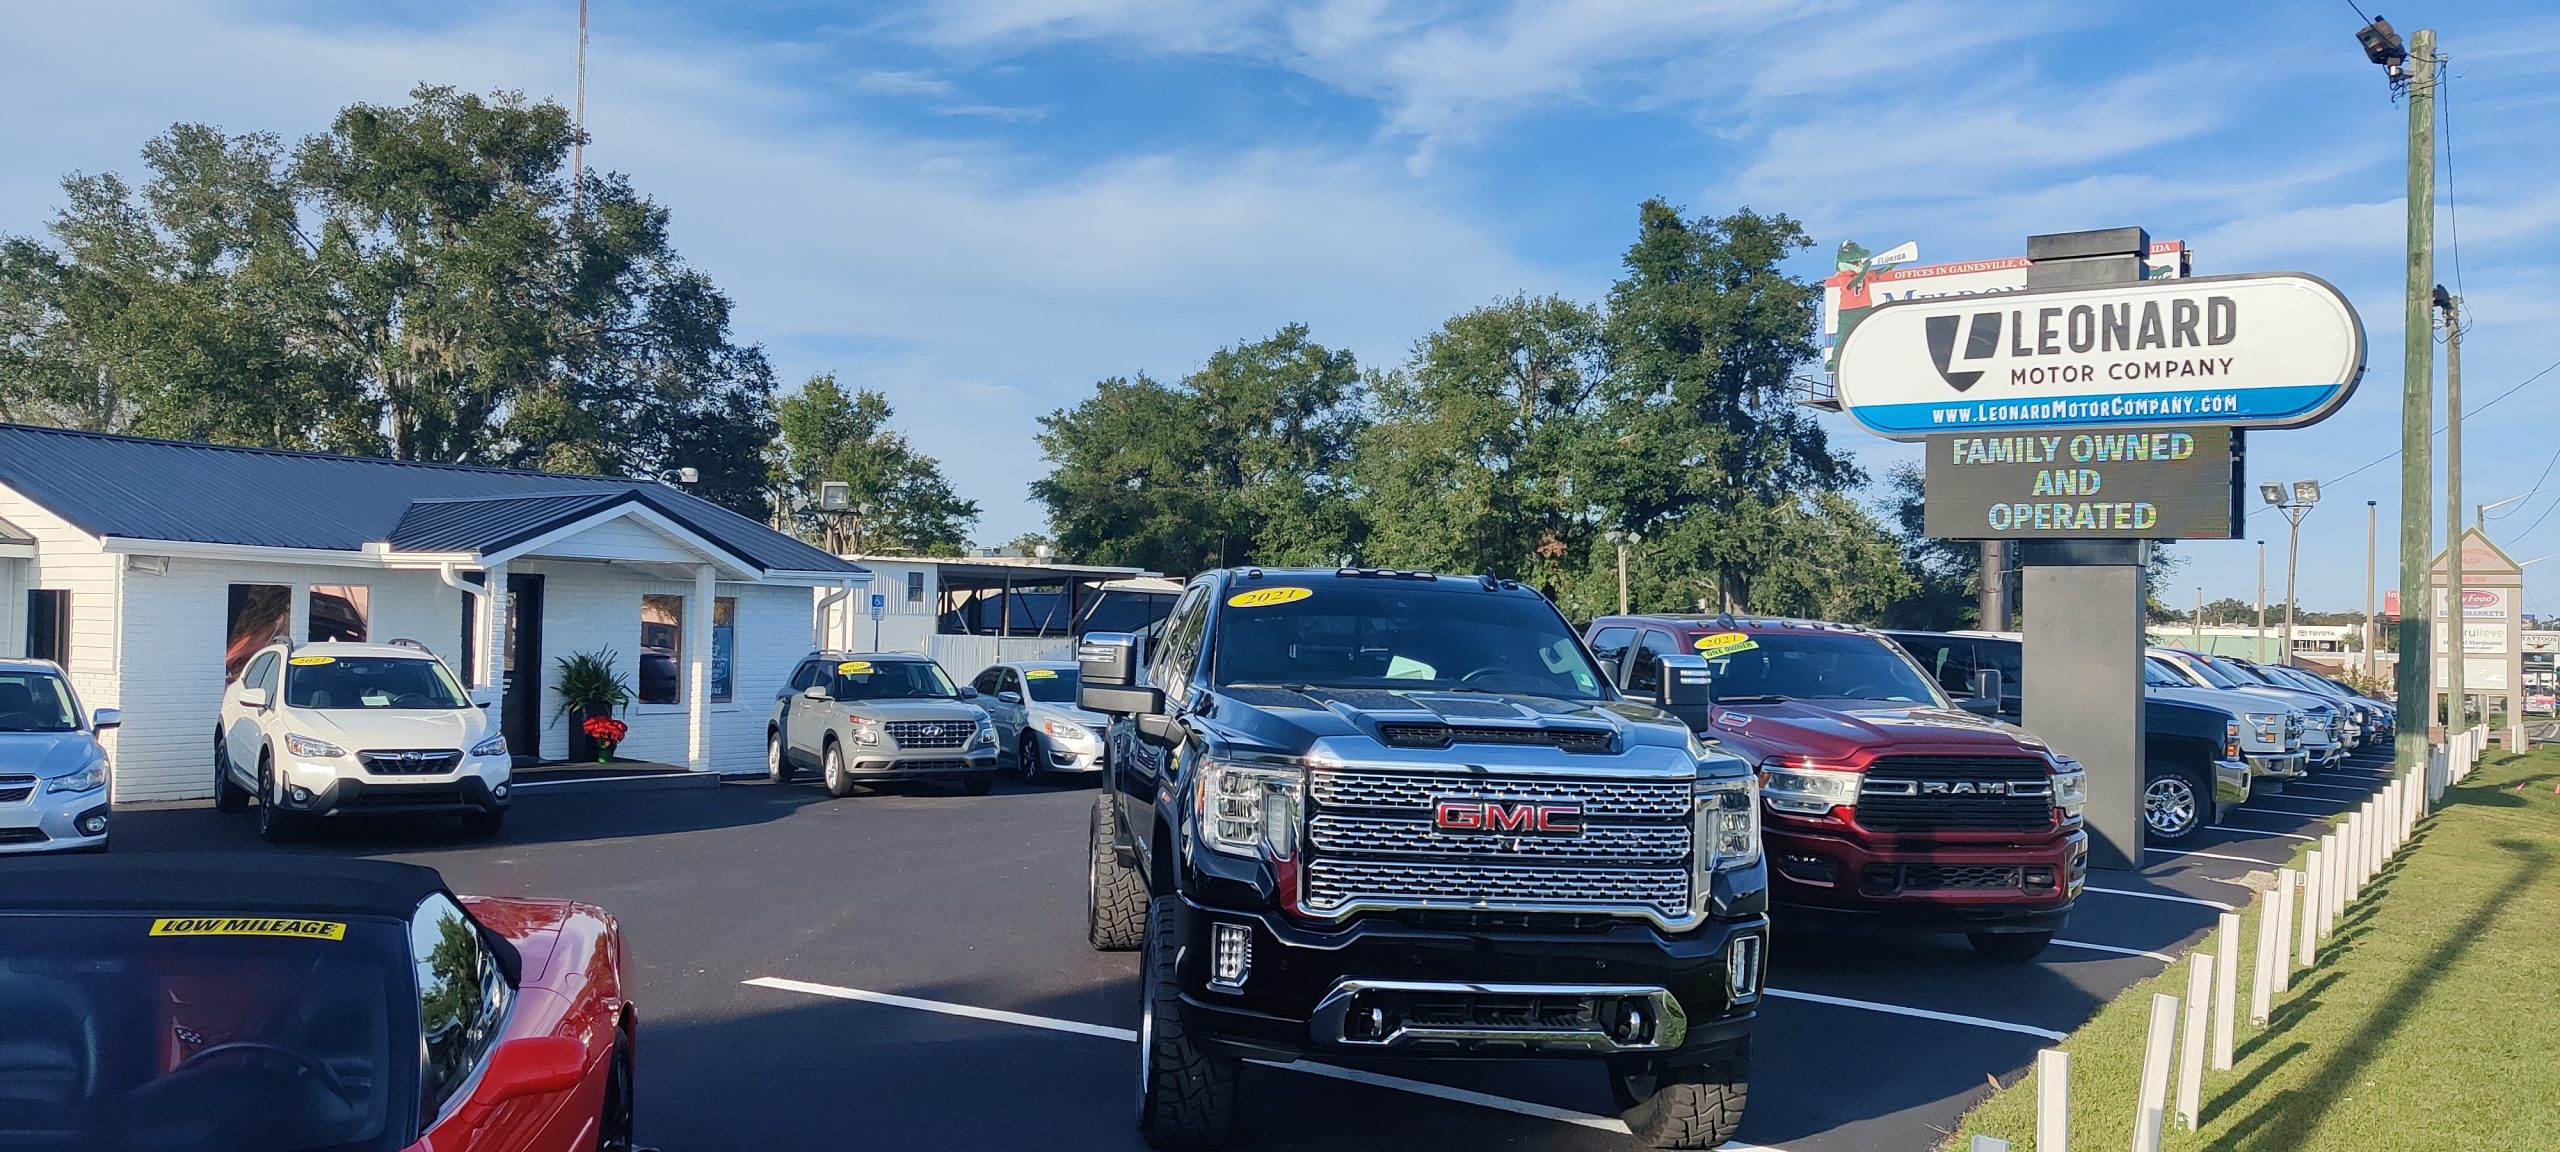 New "Leonard" Car Lot in Ocala, FL